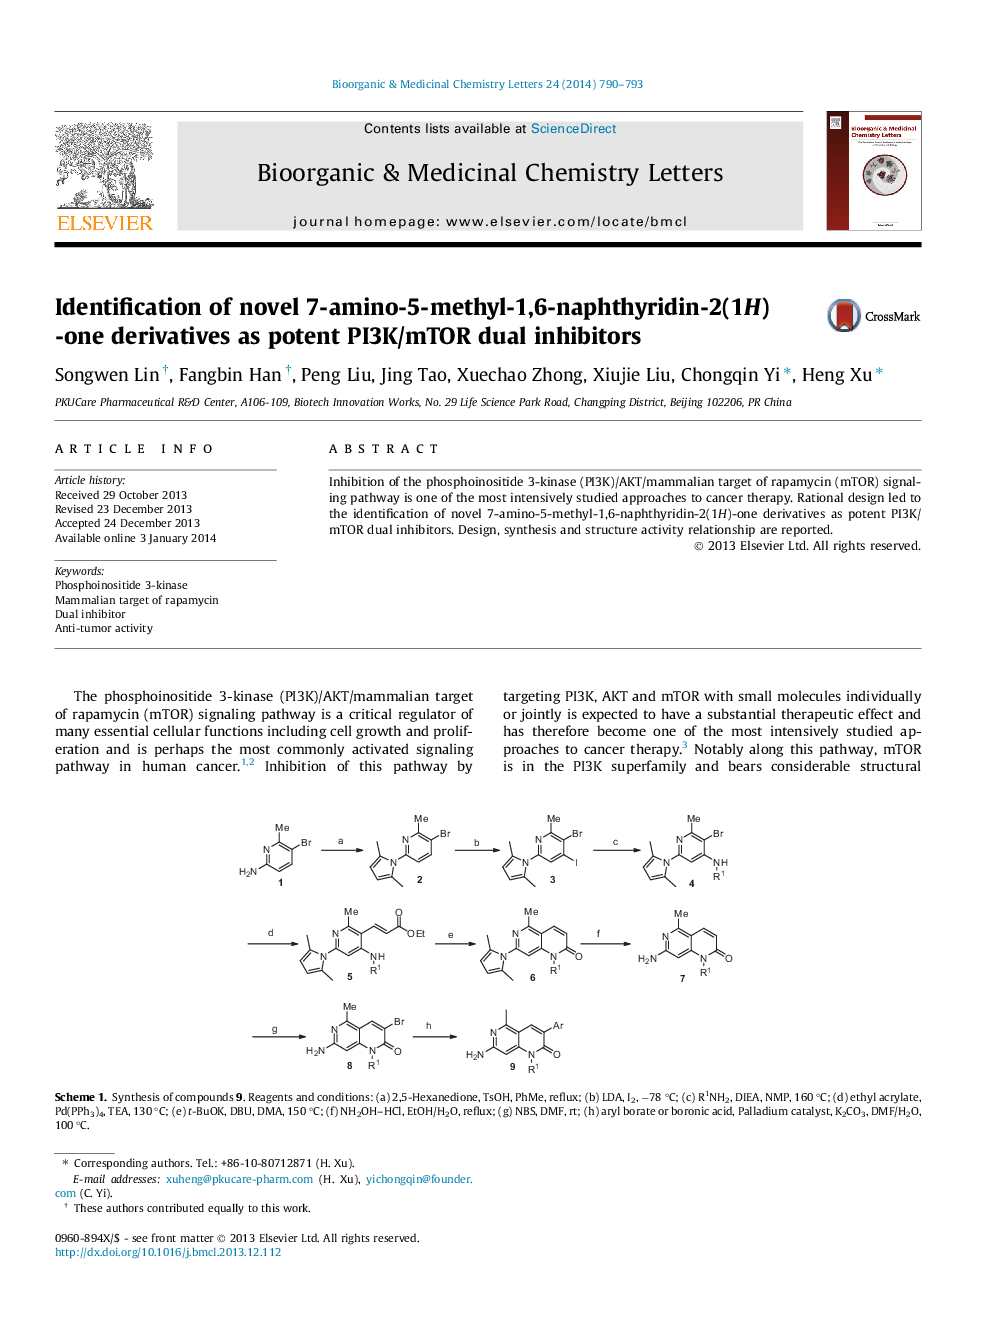 Identification of novel 7-amino-5-methyl-1,6-naphthyridin-2(1H)-one derivatives as potent PI3K/mTOR dual inhibitors